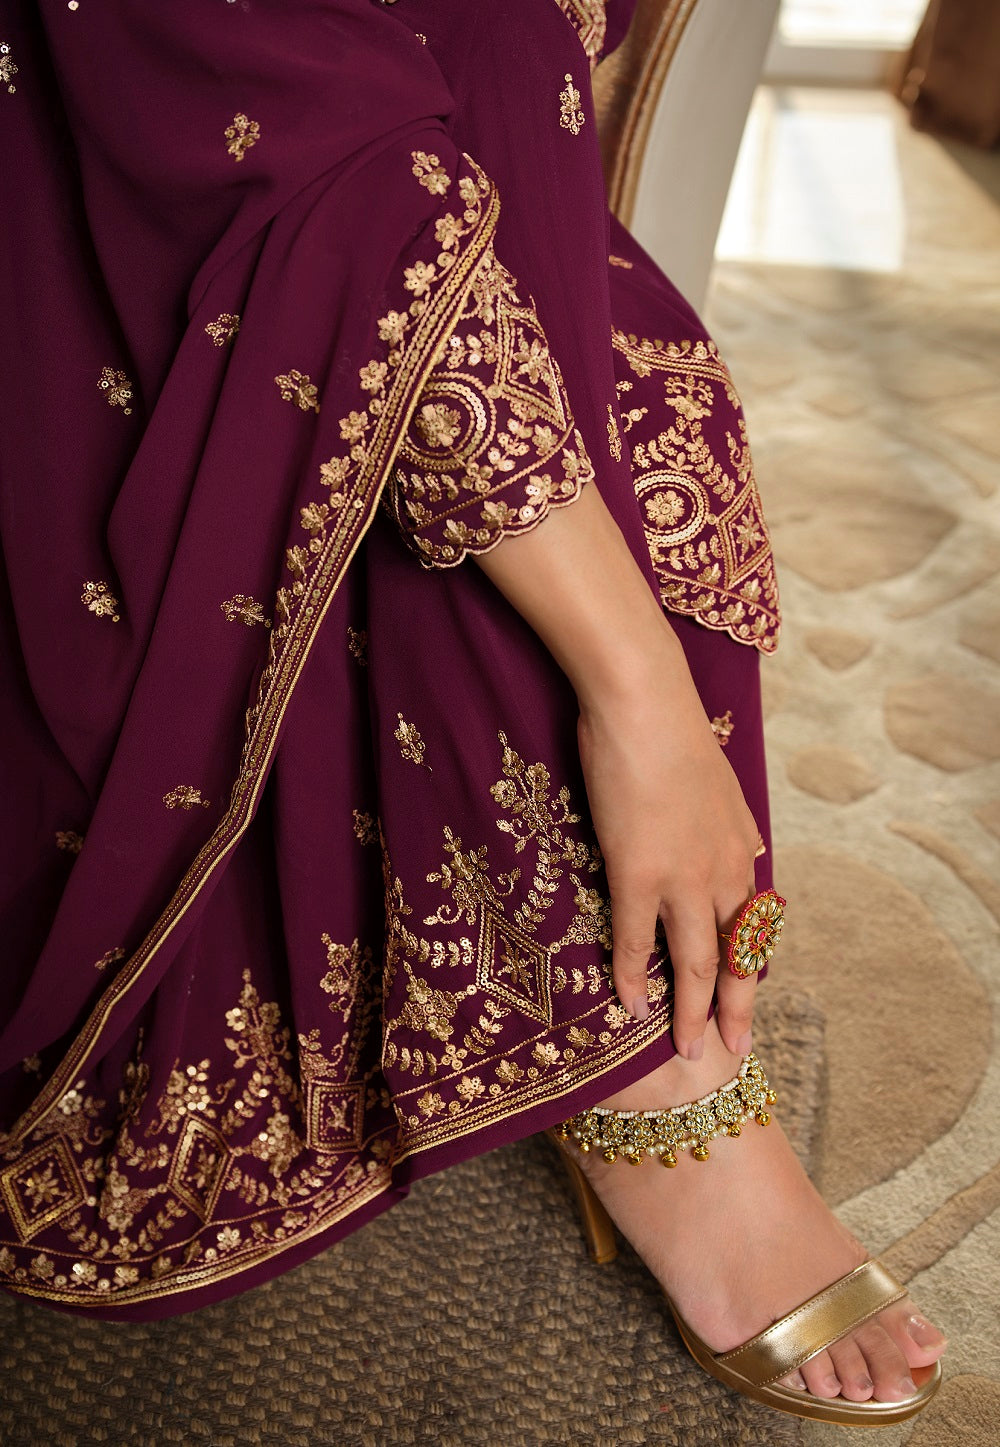 Georgette Embroidered Pakistani Suit in Purple